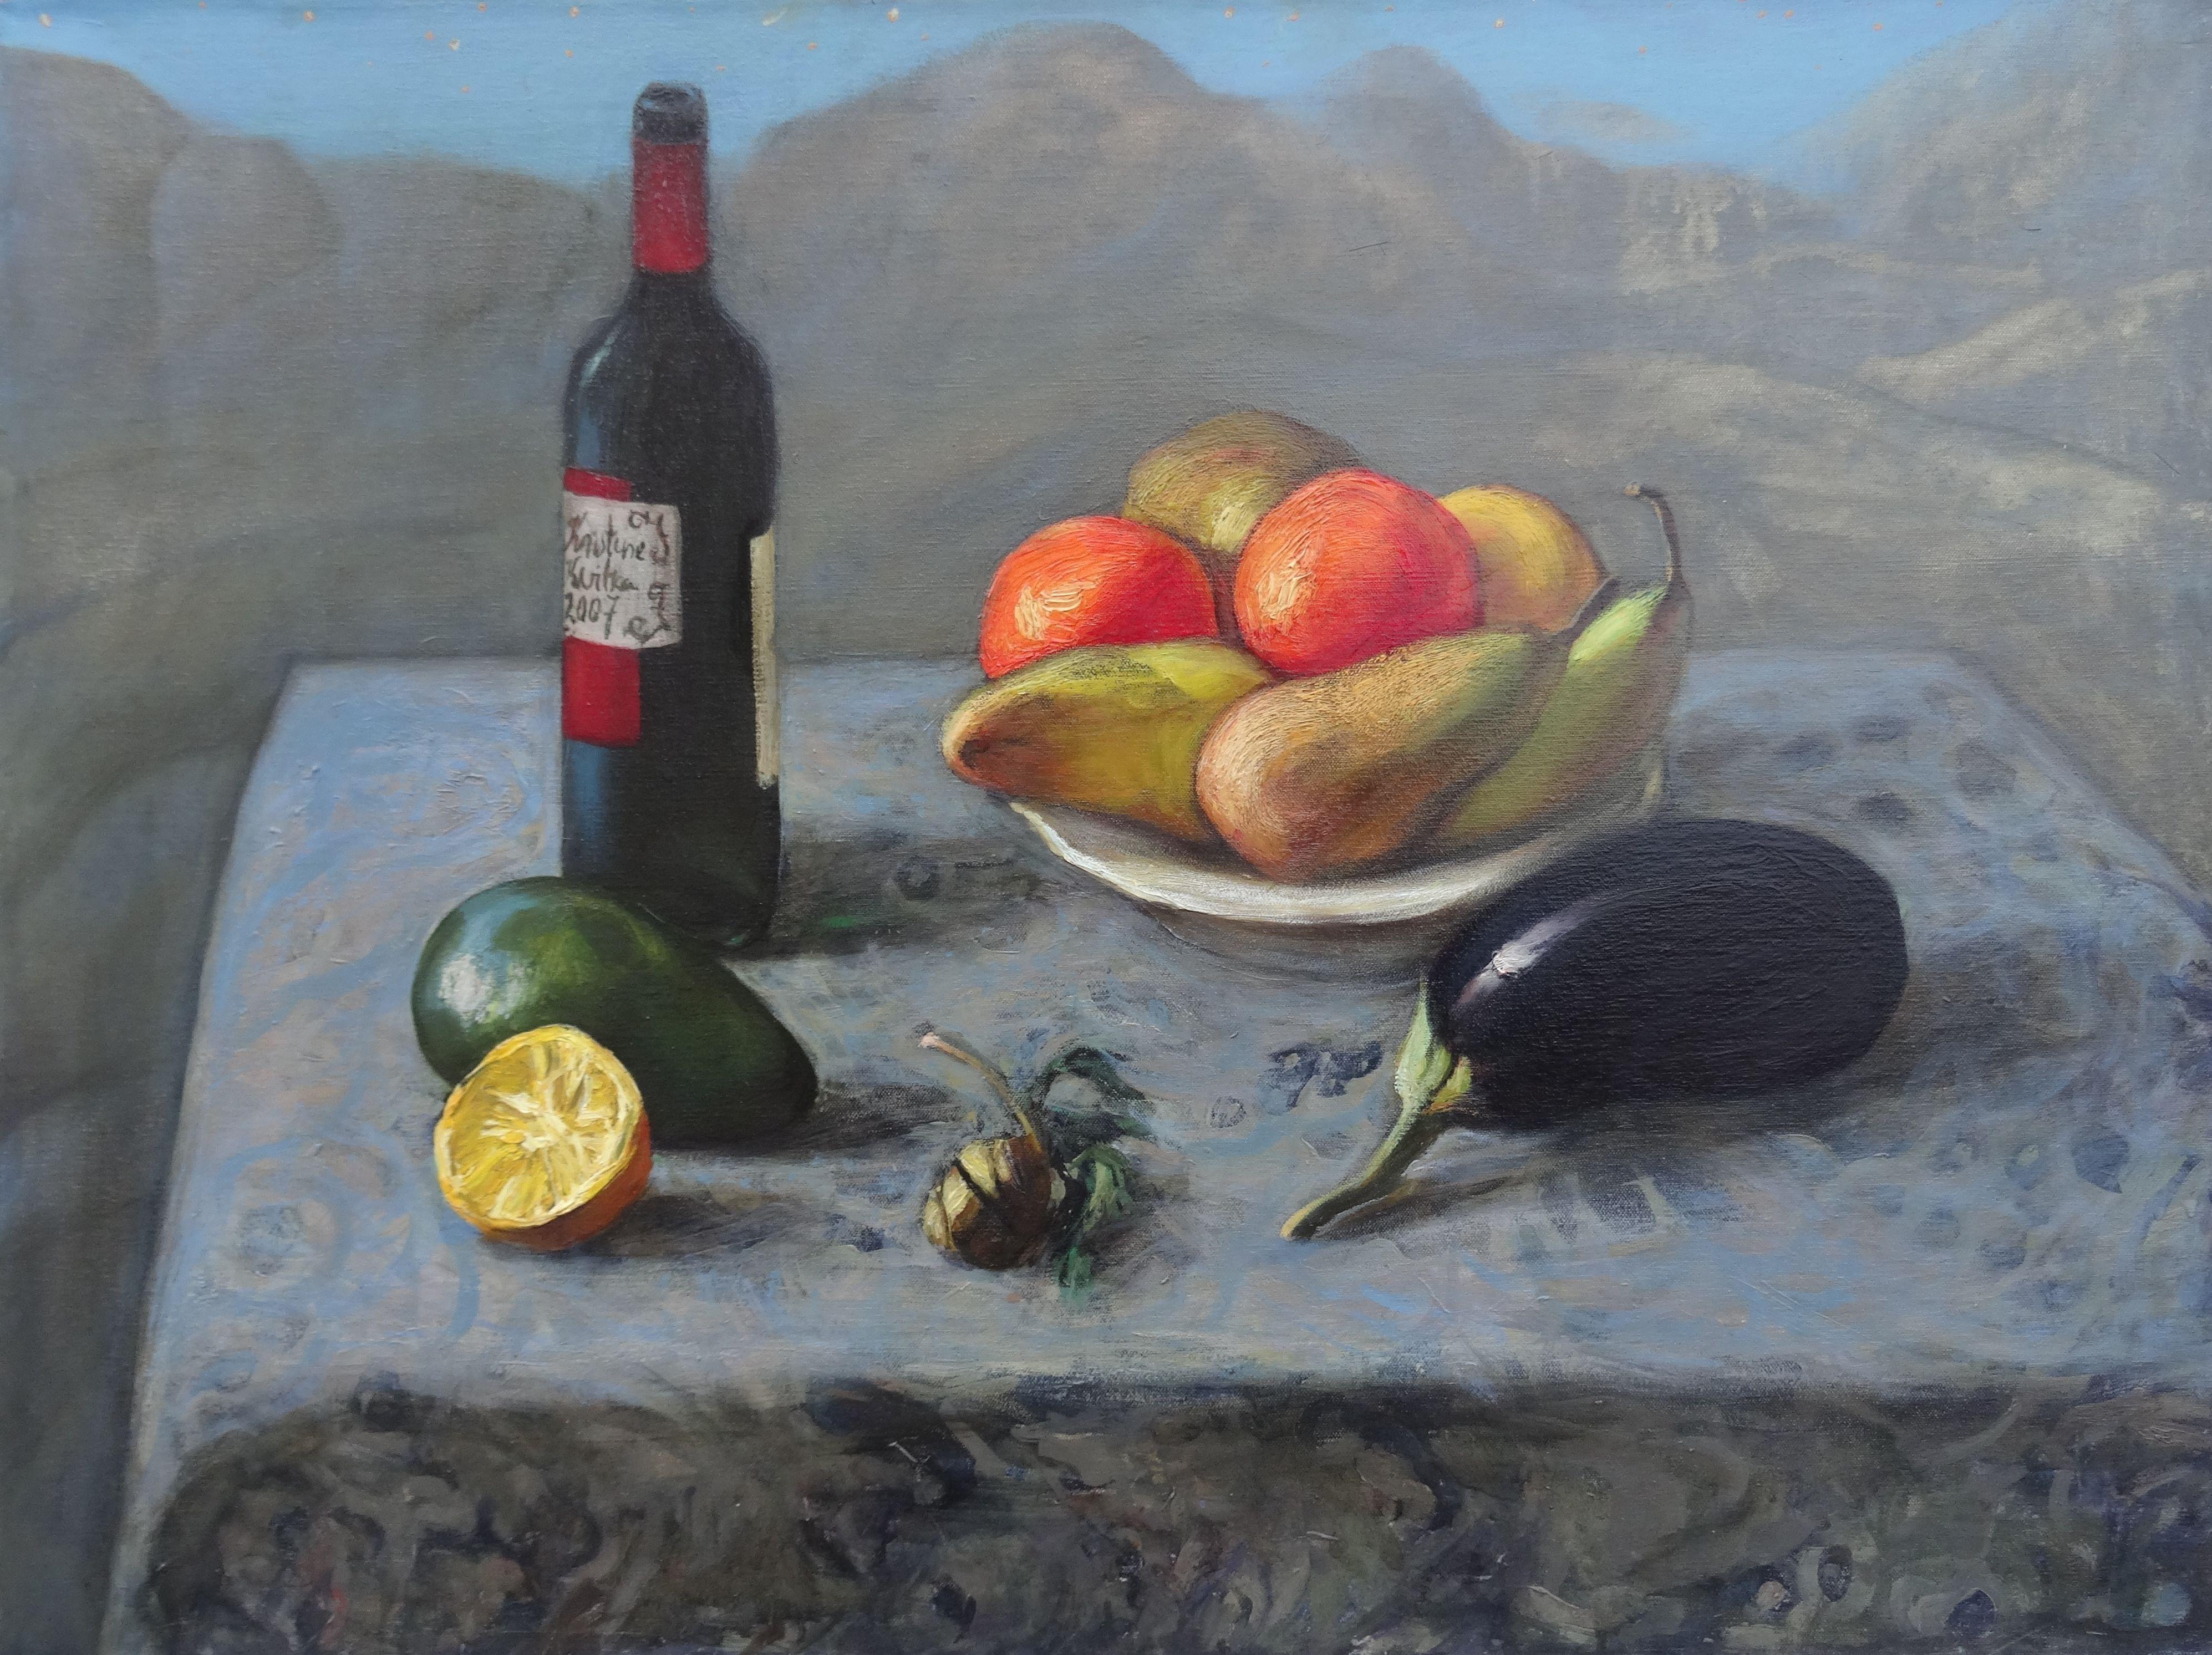   Evening still life. 2007, oil on canvas, 60x80 cm